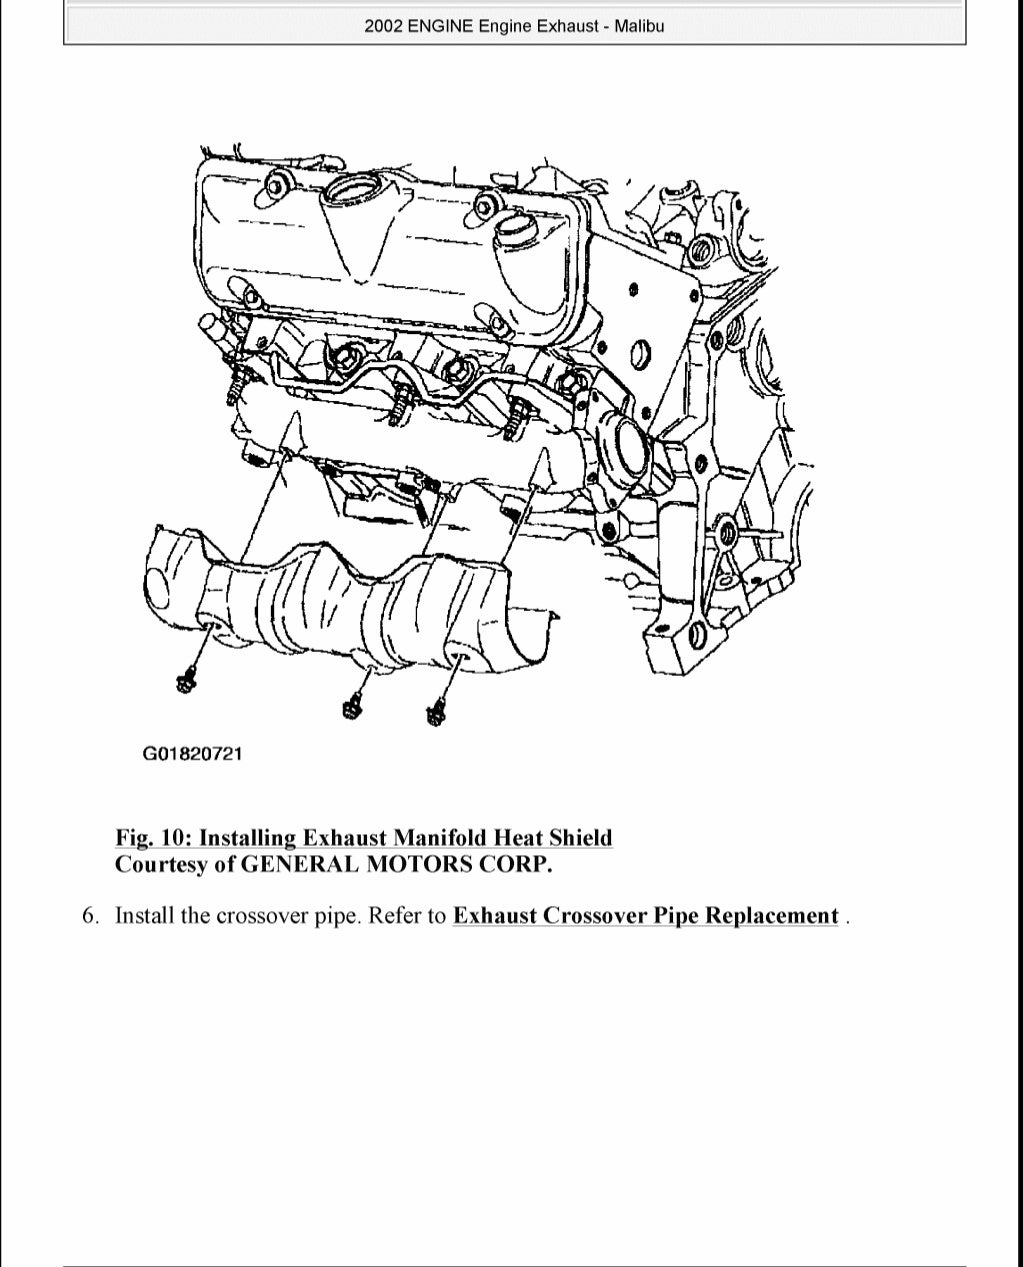 1997 Chevrolet Malibu Service Repair Manual